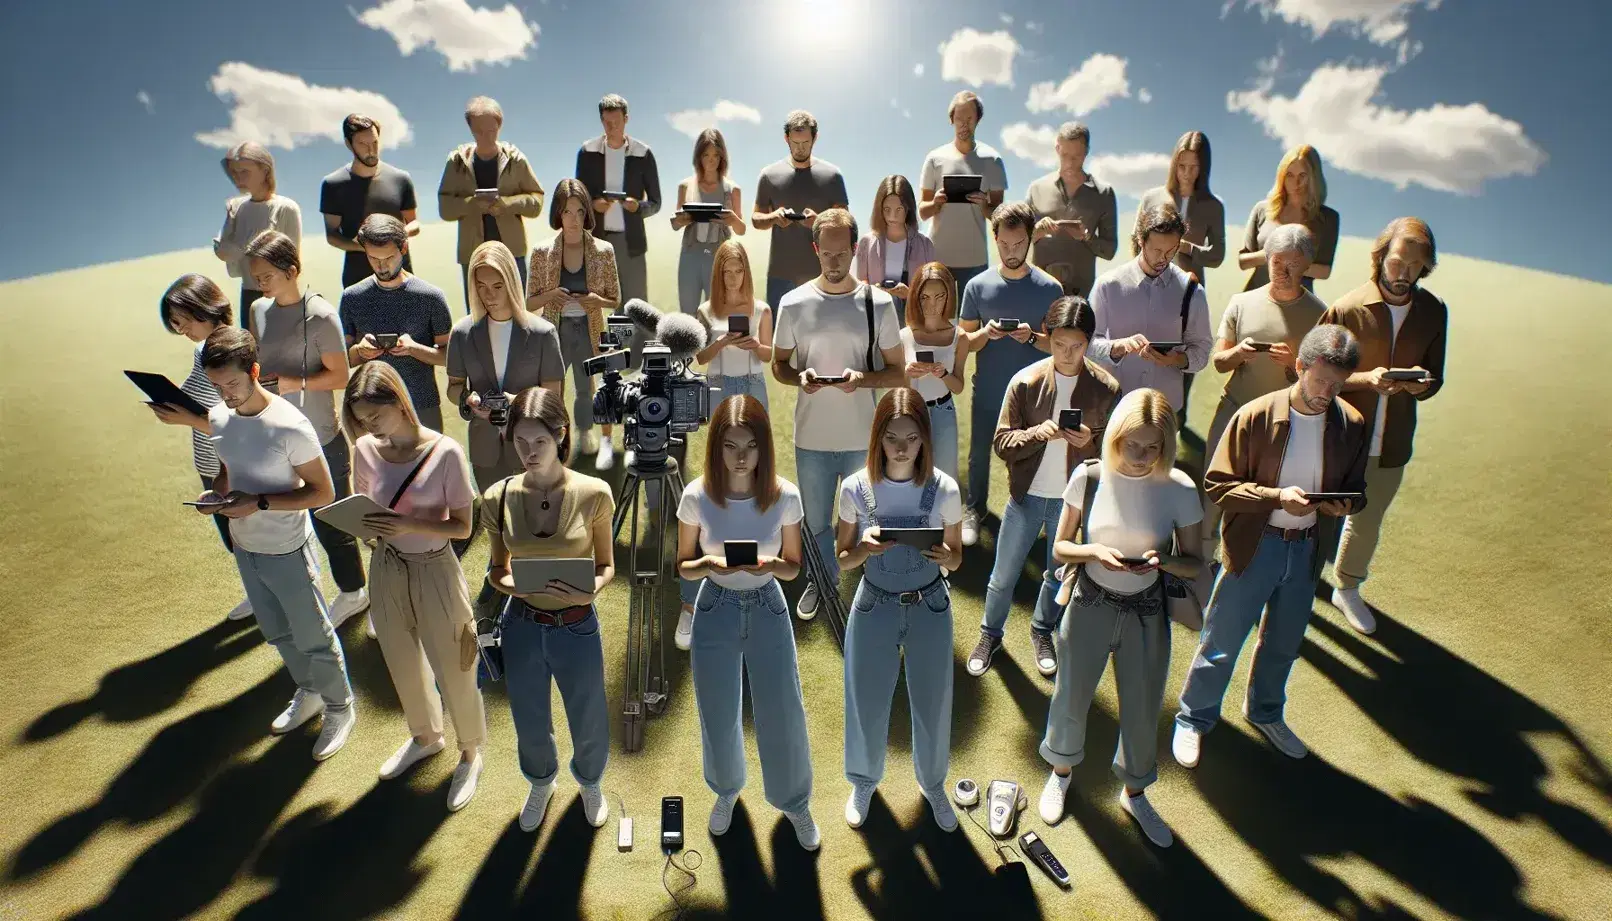 Grupo diverso de personas con dispositivos de comunicación al aire libre bajo cielo azul.